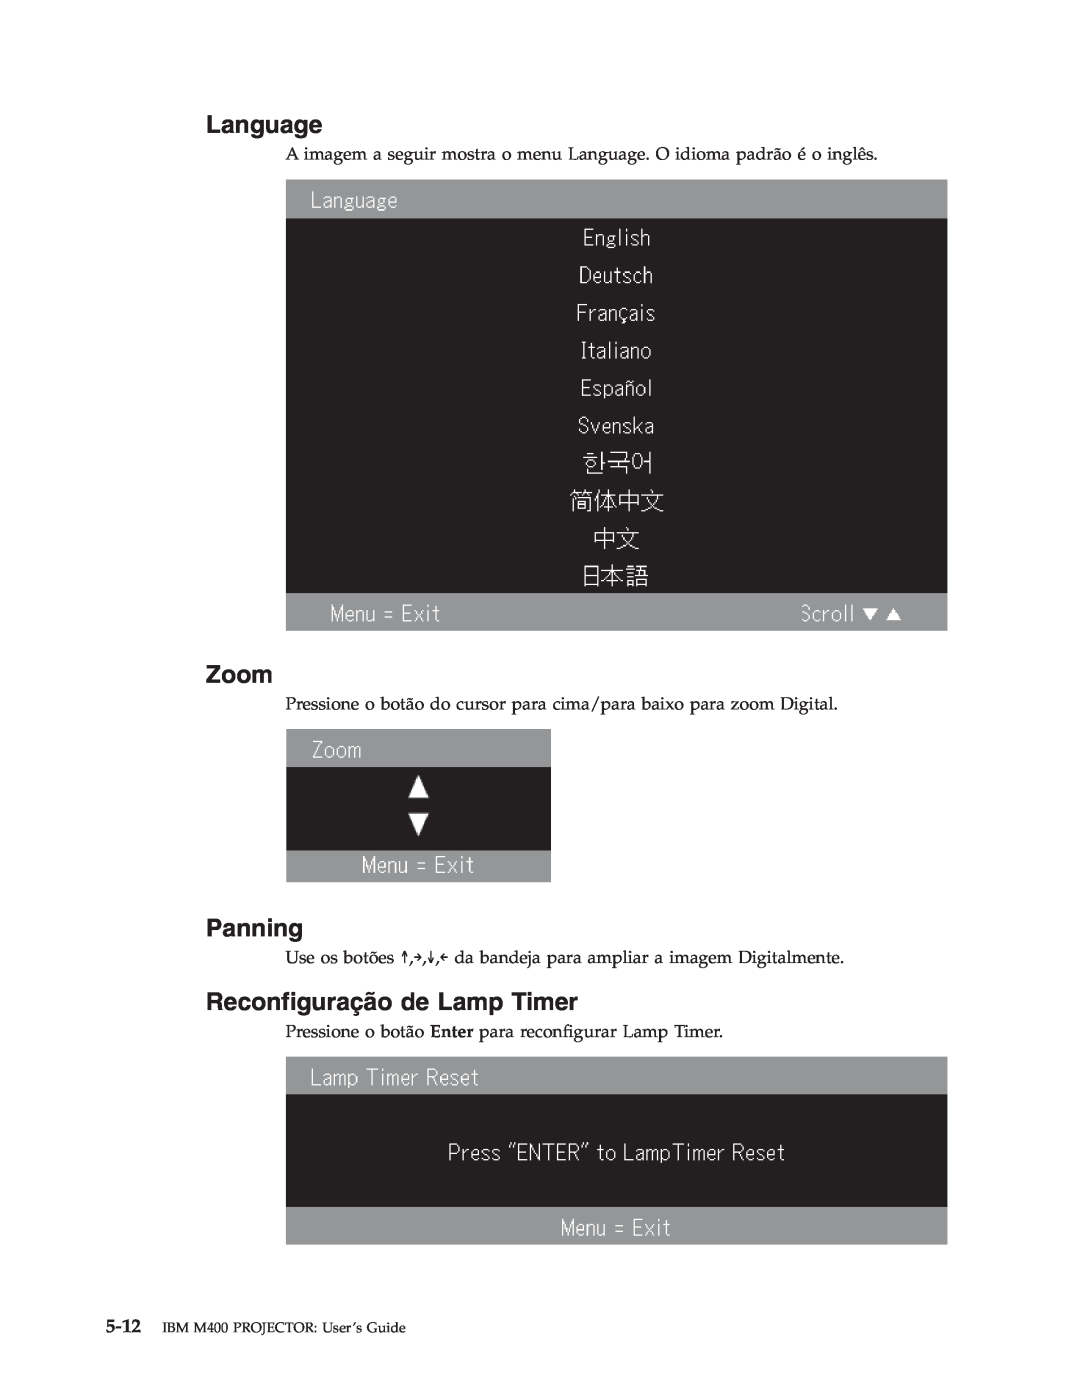 IBM manual Language, Zoom, Panning, Reconfiguração de Lamp Timer, IBM M400 PROJECTOR User’s Guide 